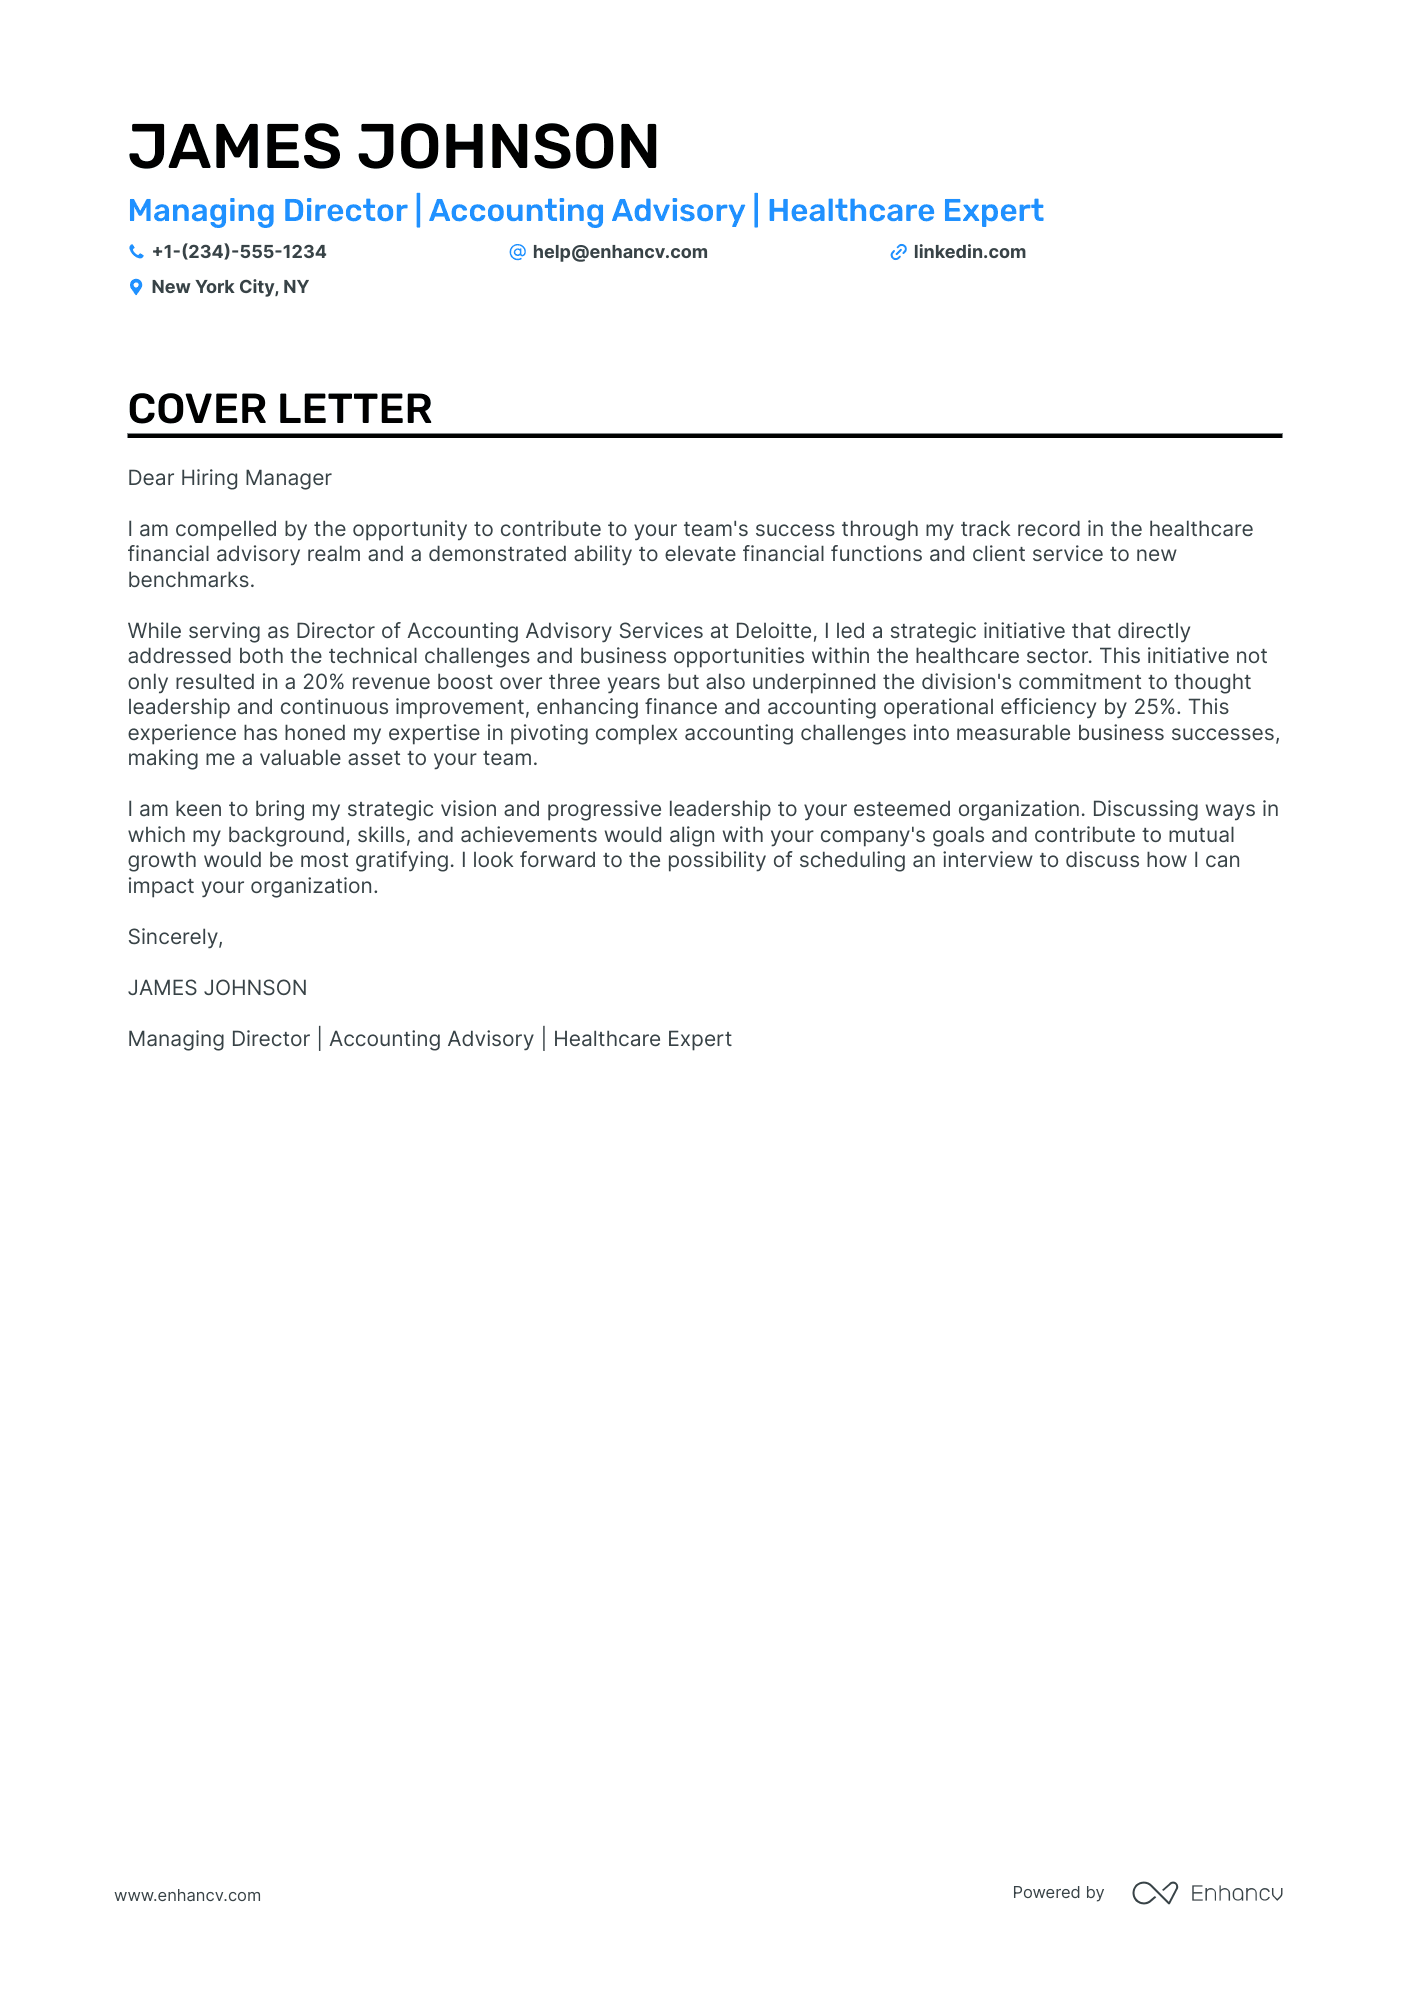 Managing Director cover letter